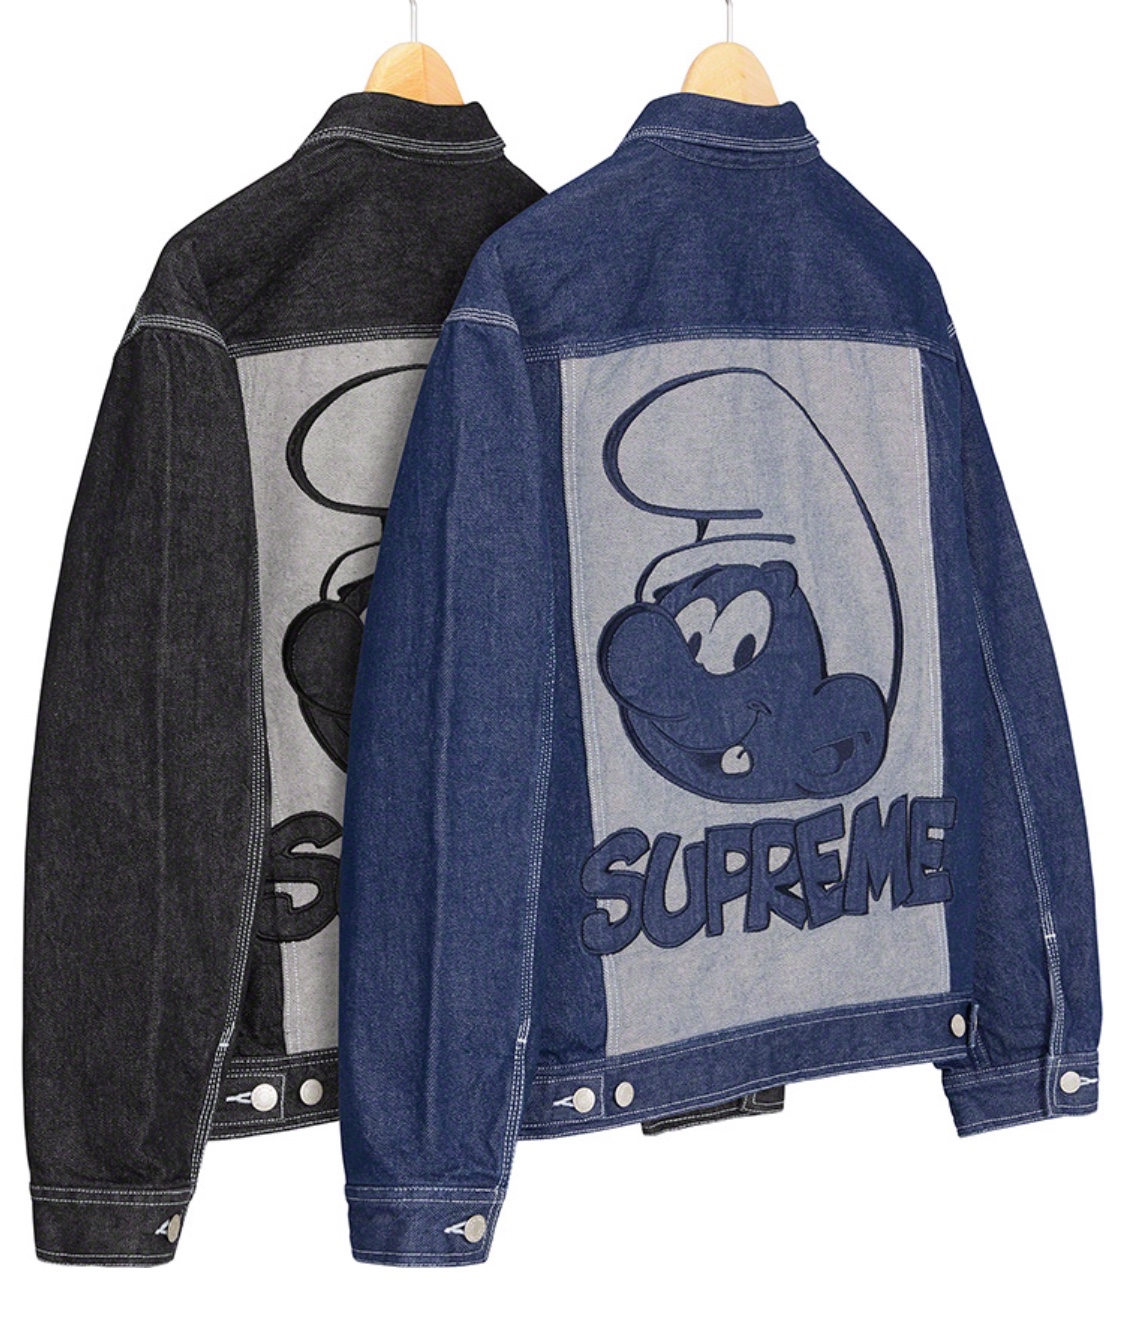 Supreme x The Smurfs denim jacket